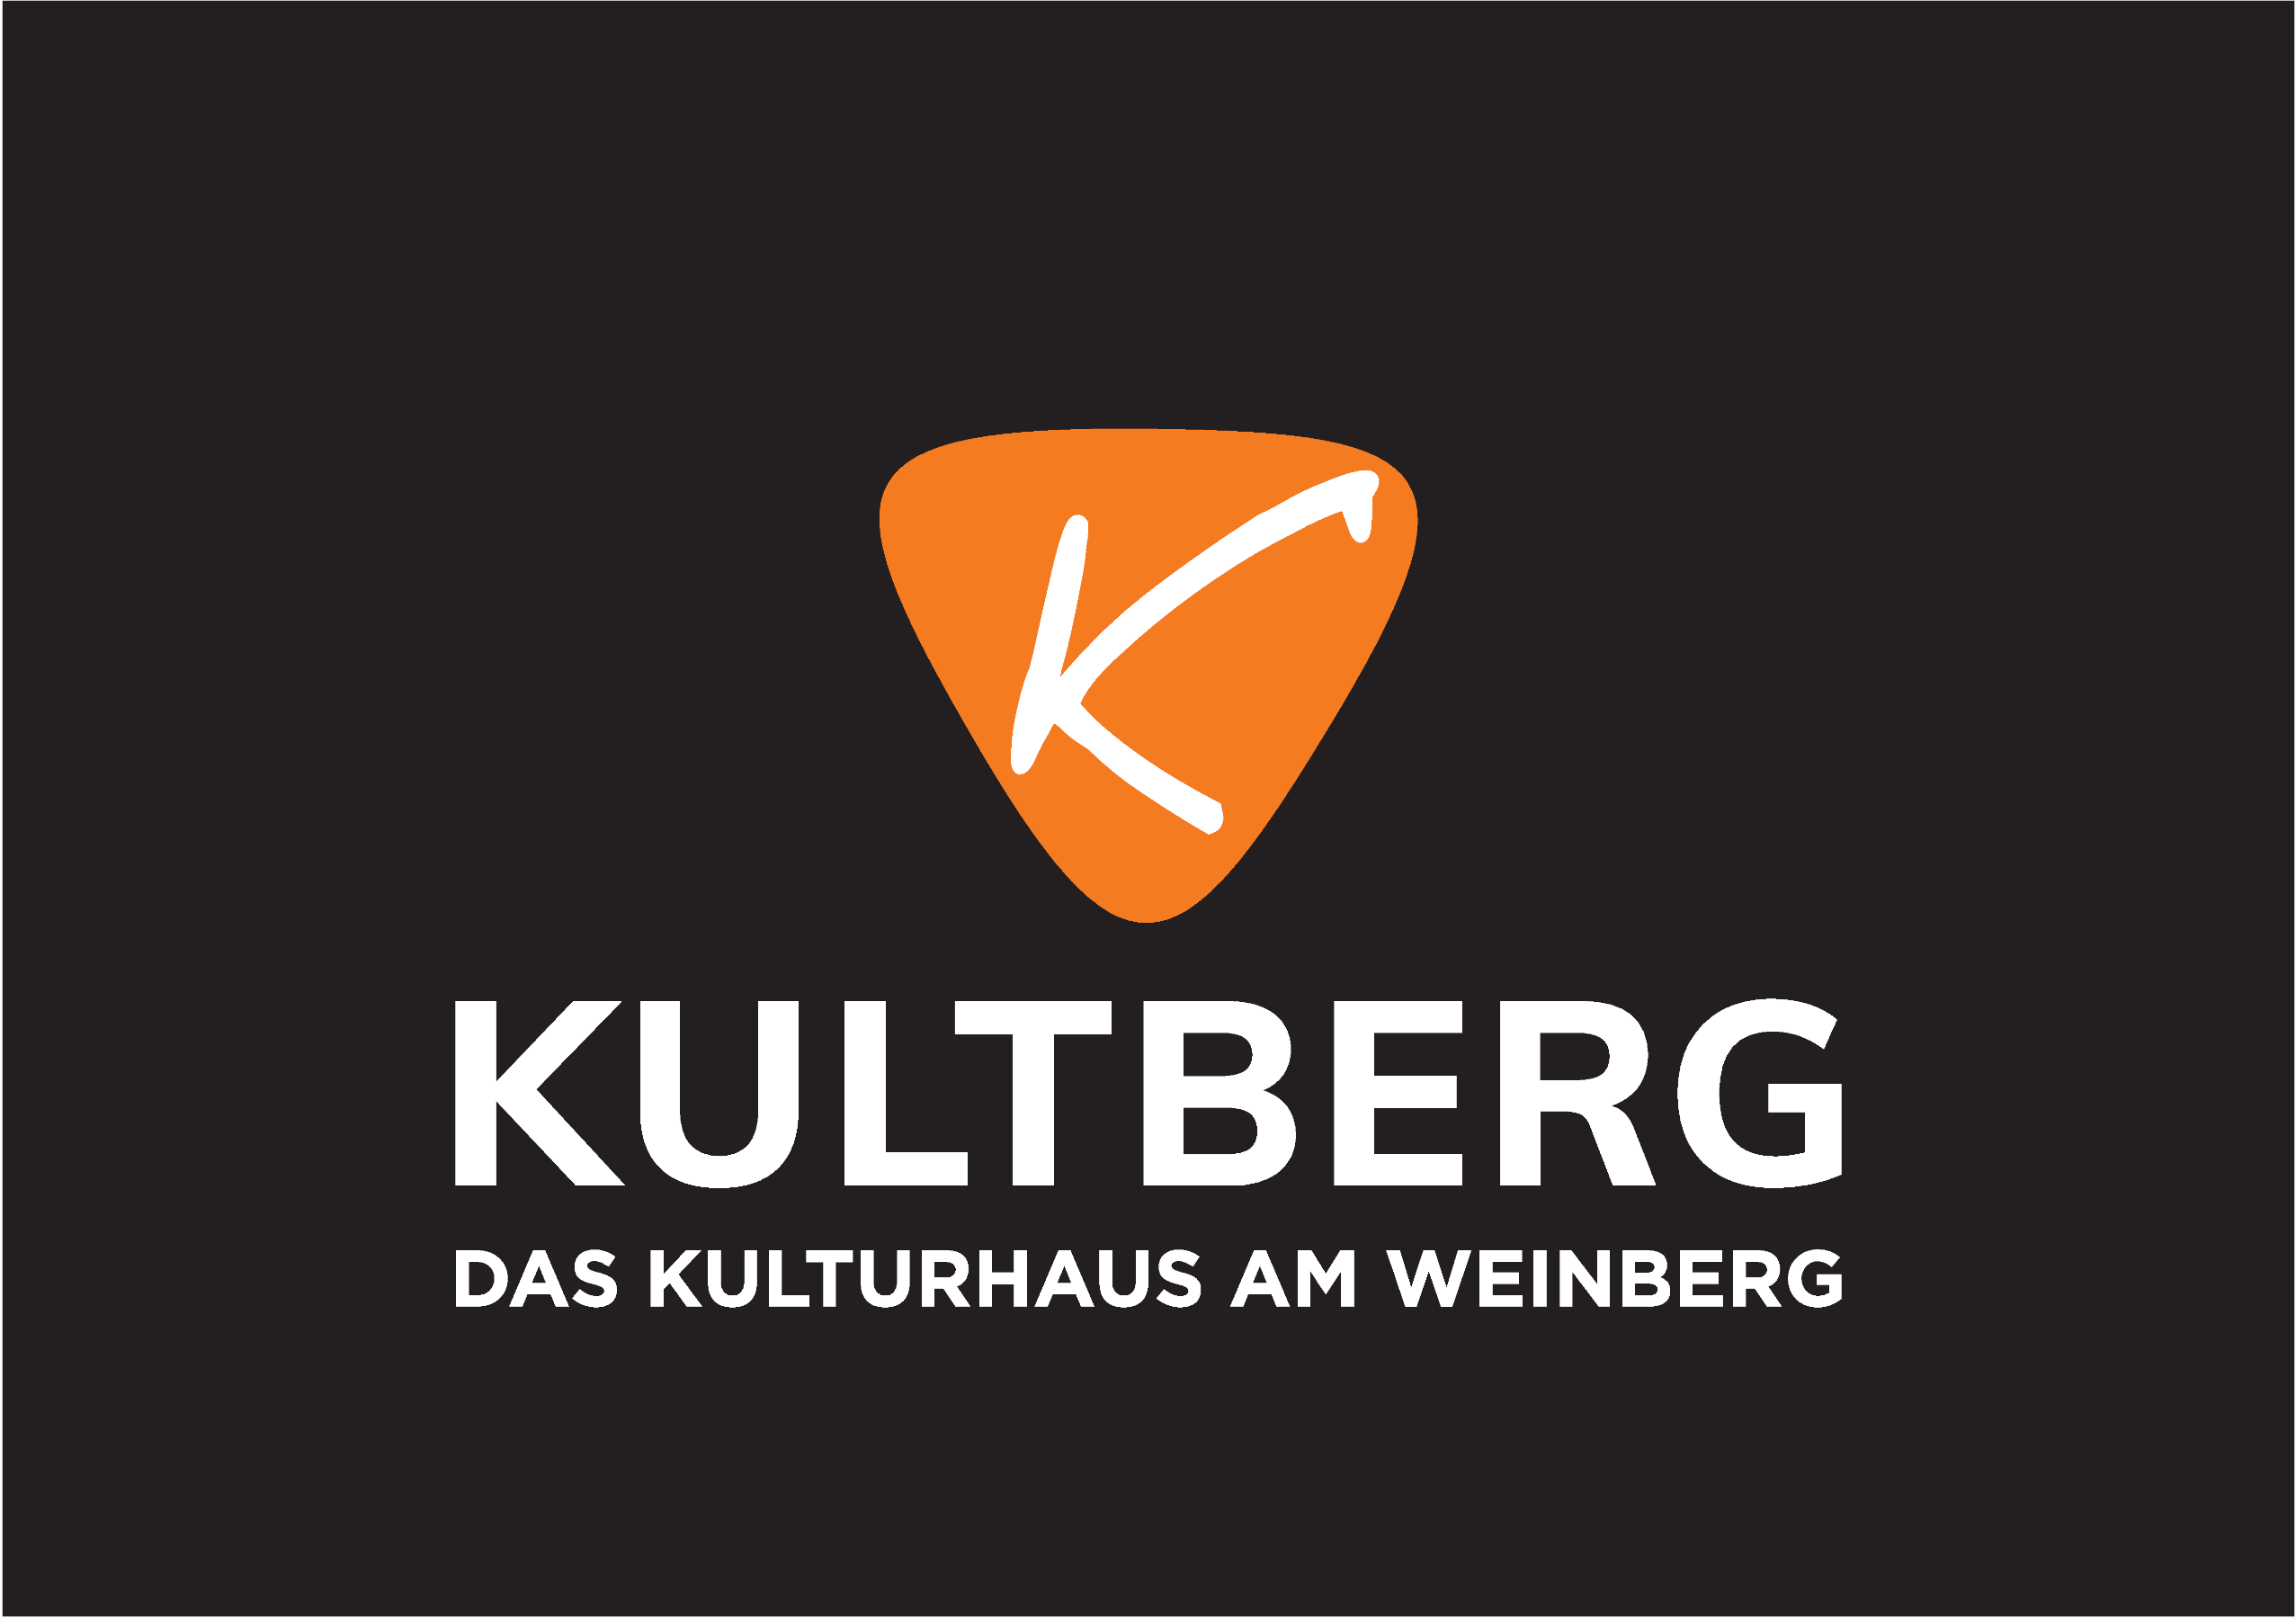 KULTBERG - Kulturhaus am Weinberg